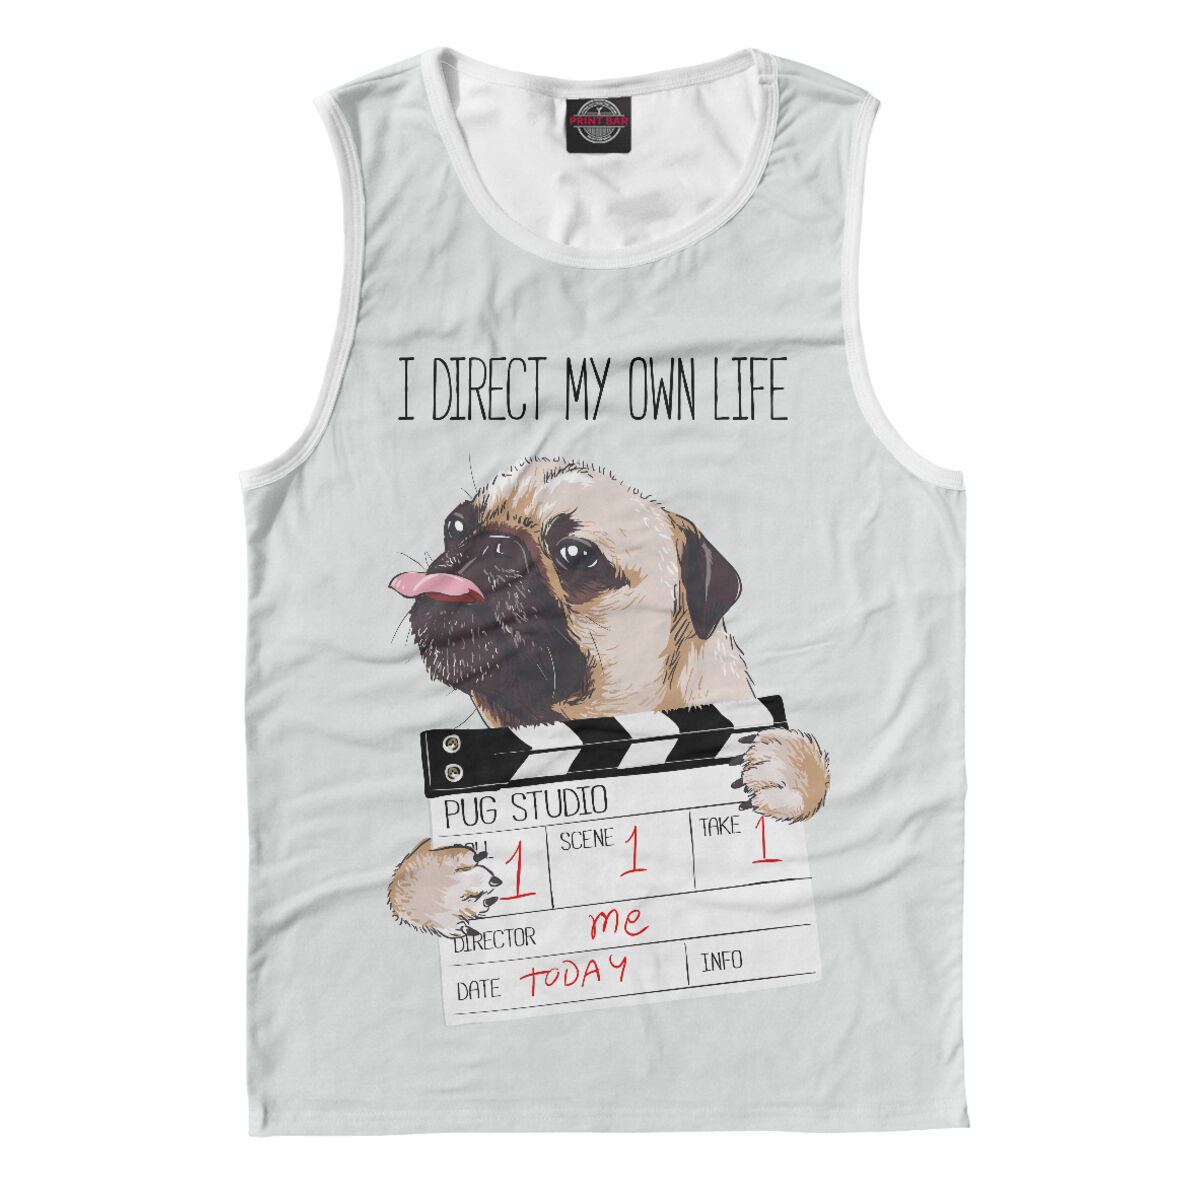 Pug Life футболка. Pug Life футболка фиолетовая с мопсами. I own my life